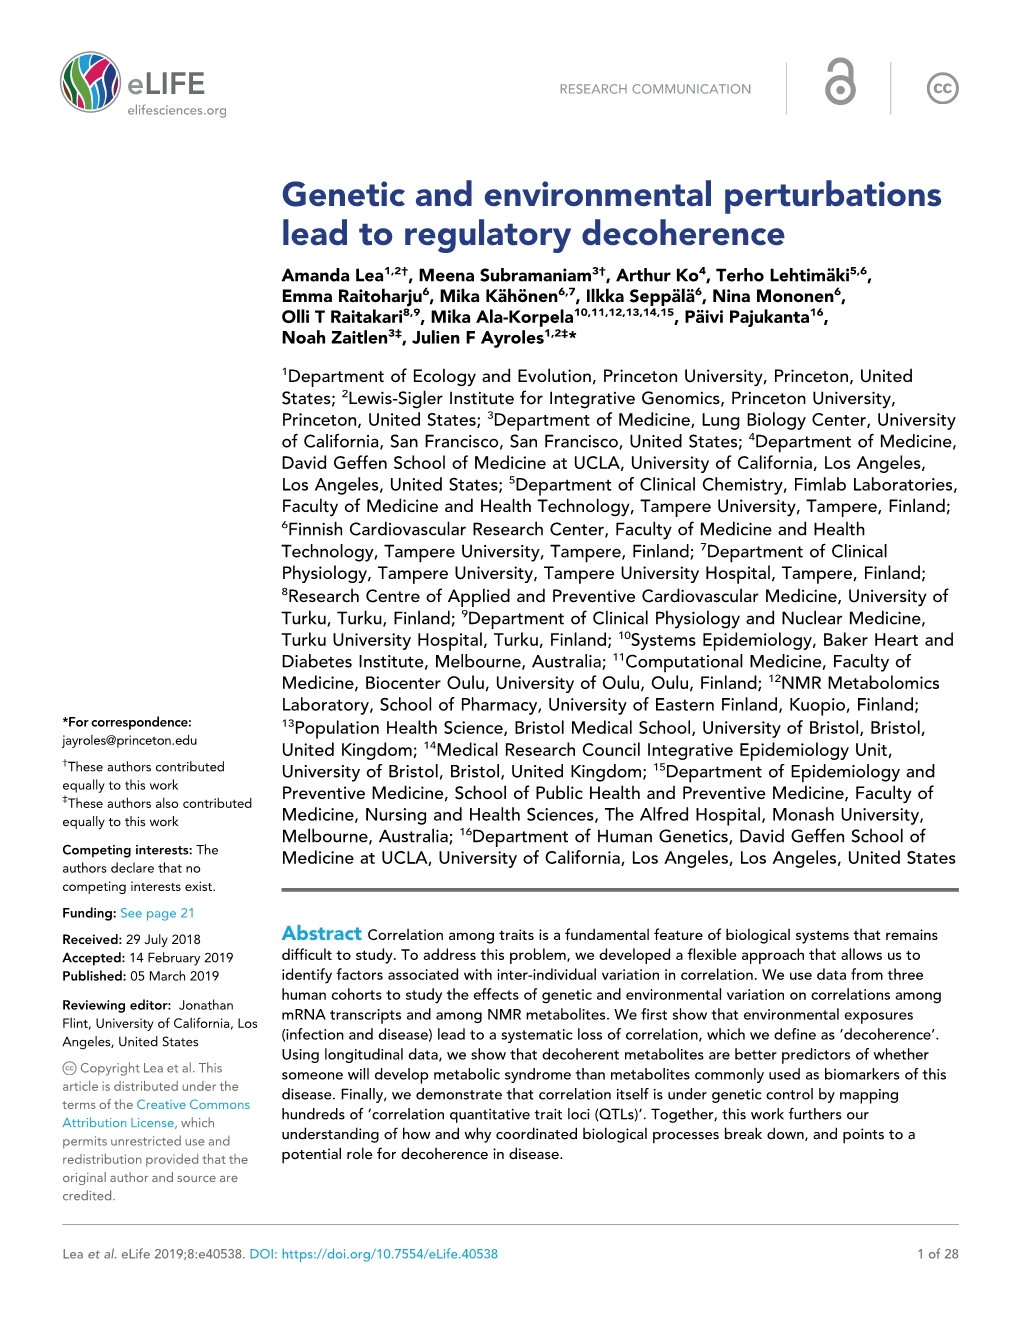 Genetic and Environmental Perturbations Lead to Regulatory